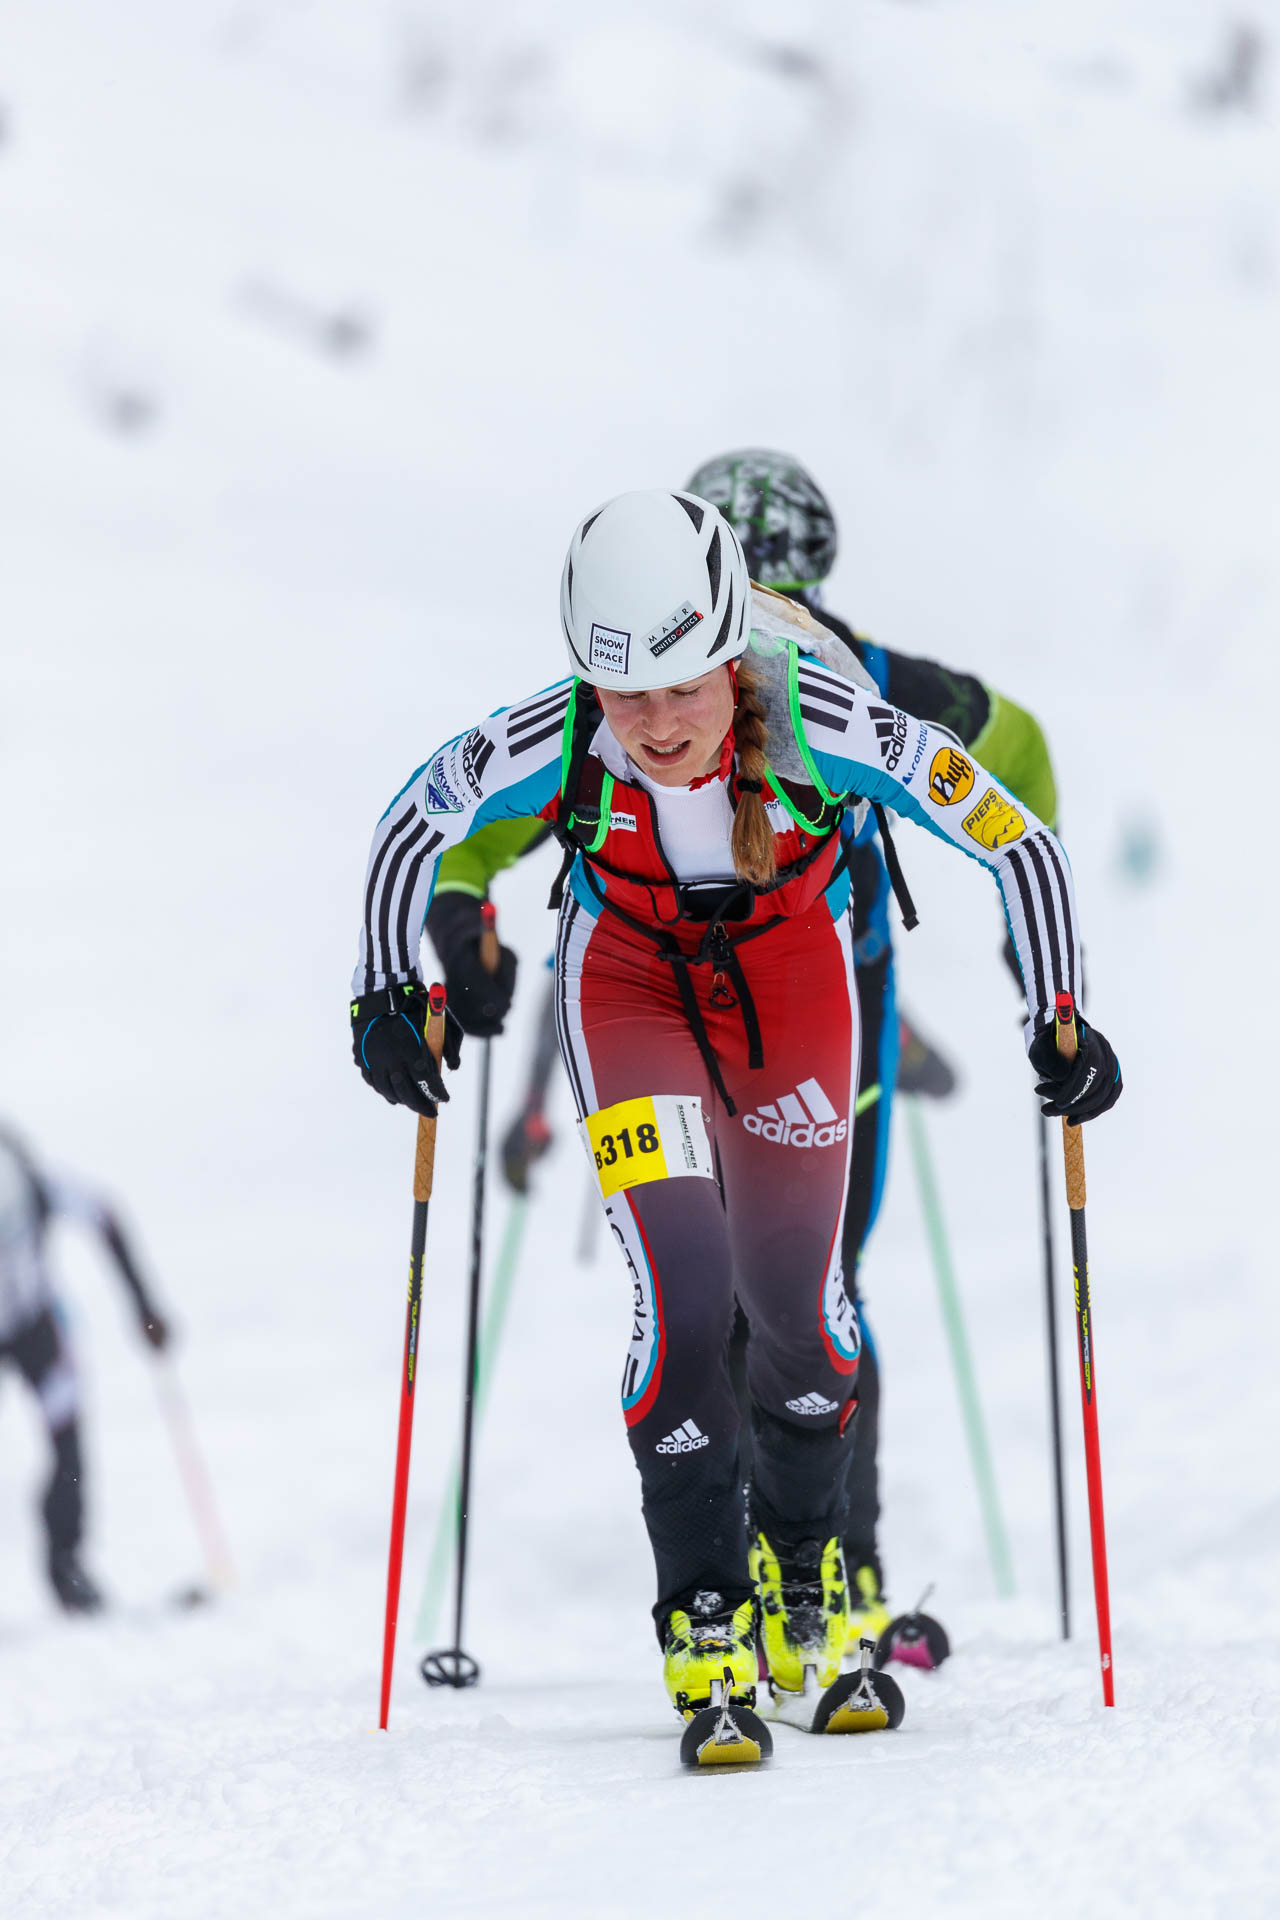 Jennerstier 2018, Vertical Race, German Championships, Berchtesgaden, Germany.